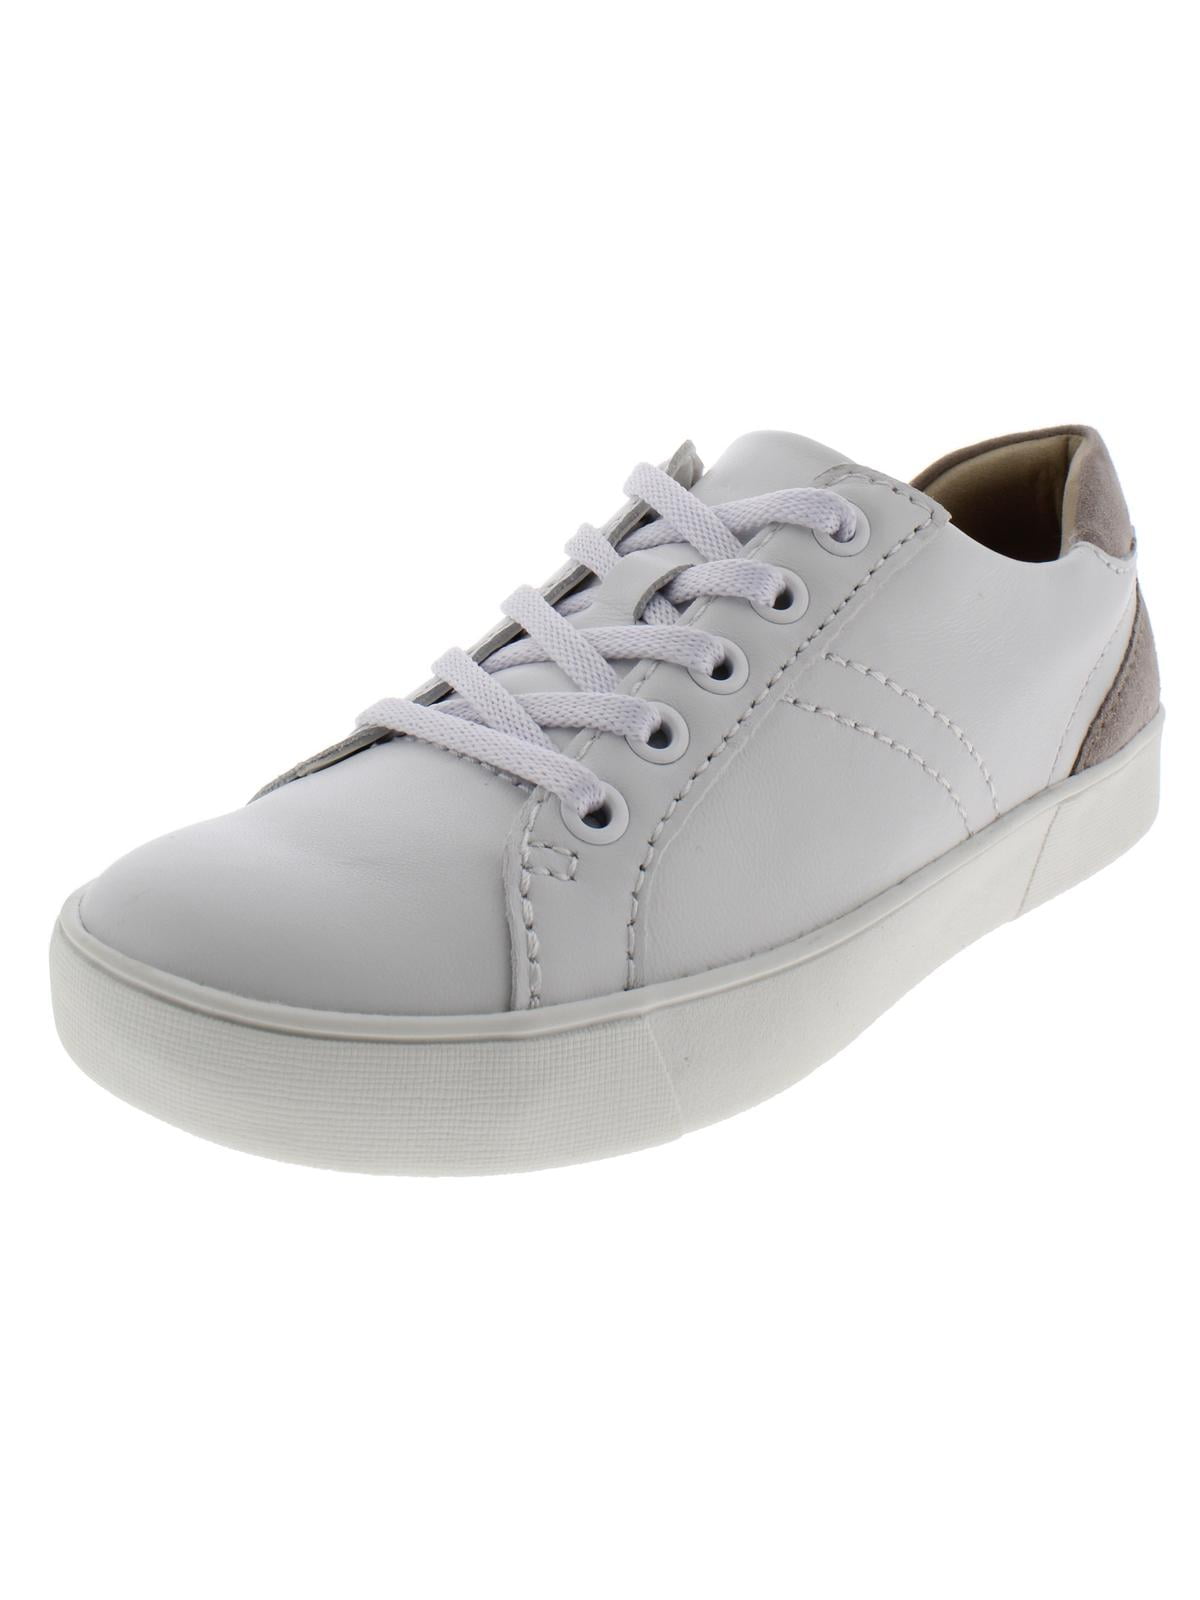 Naturalizer Womens Morrison Fashion Sneakers White 6.5 Extra Wide (E+ ...